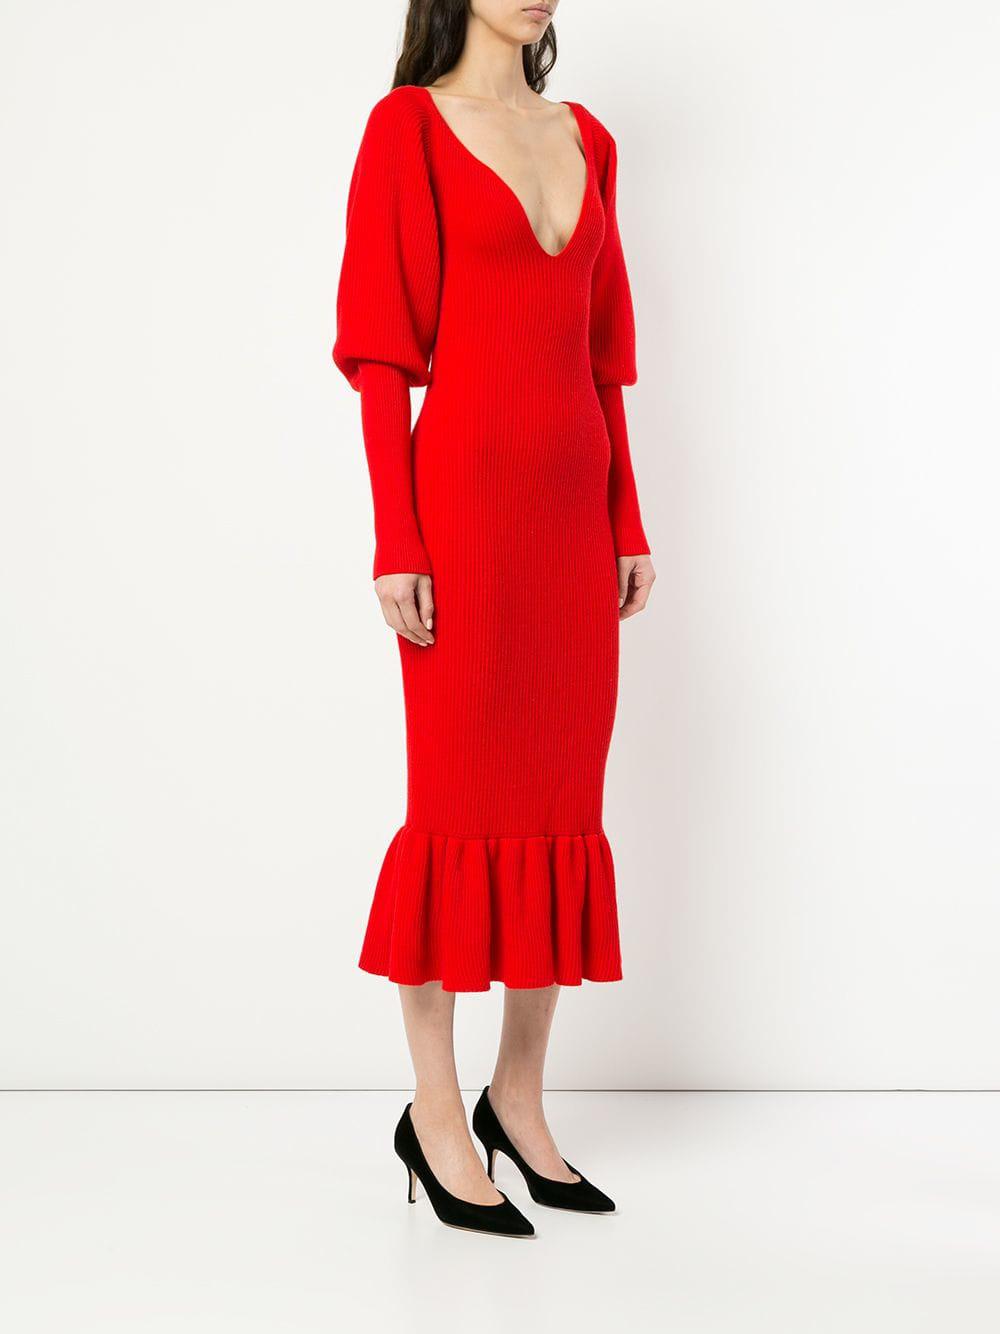 Khaite Cashmere Ina Ruffled Ribbed Wool Midi Dress in Crimson (Red) - Lyst